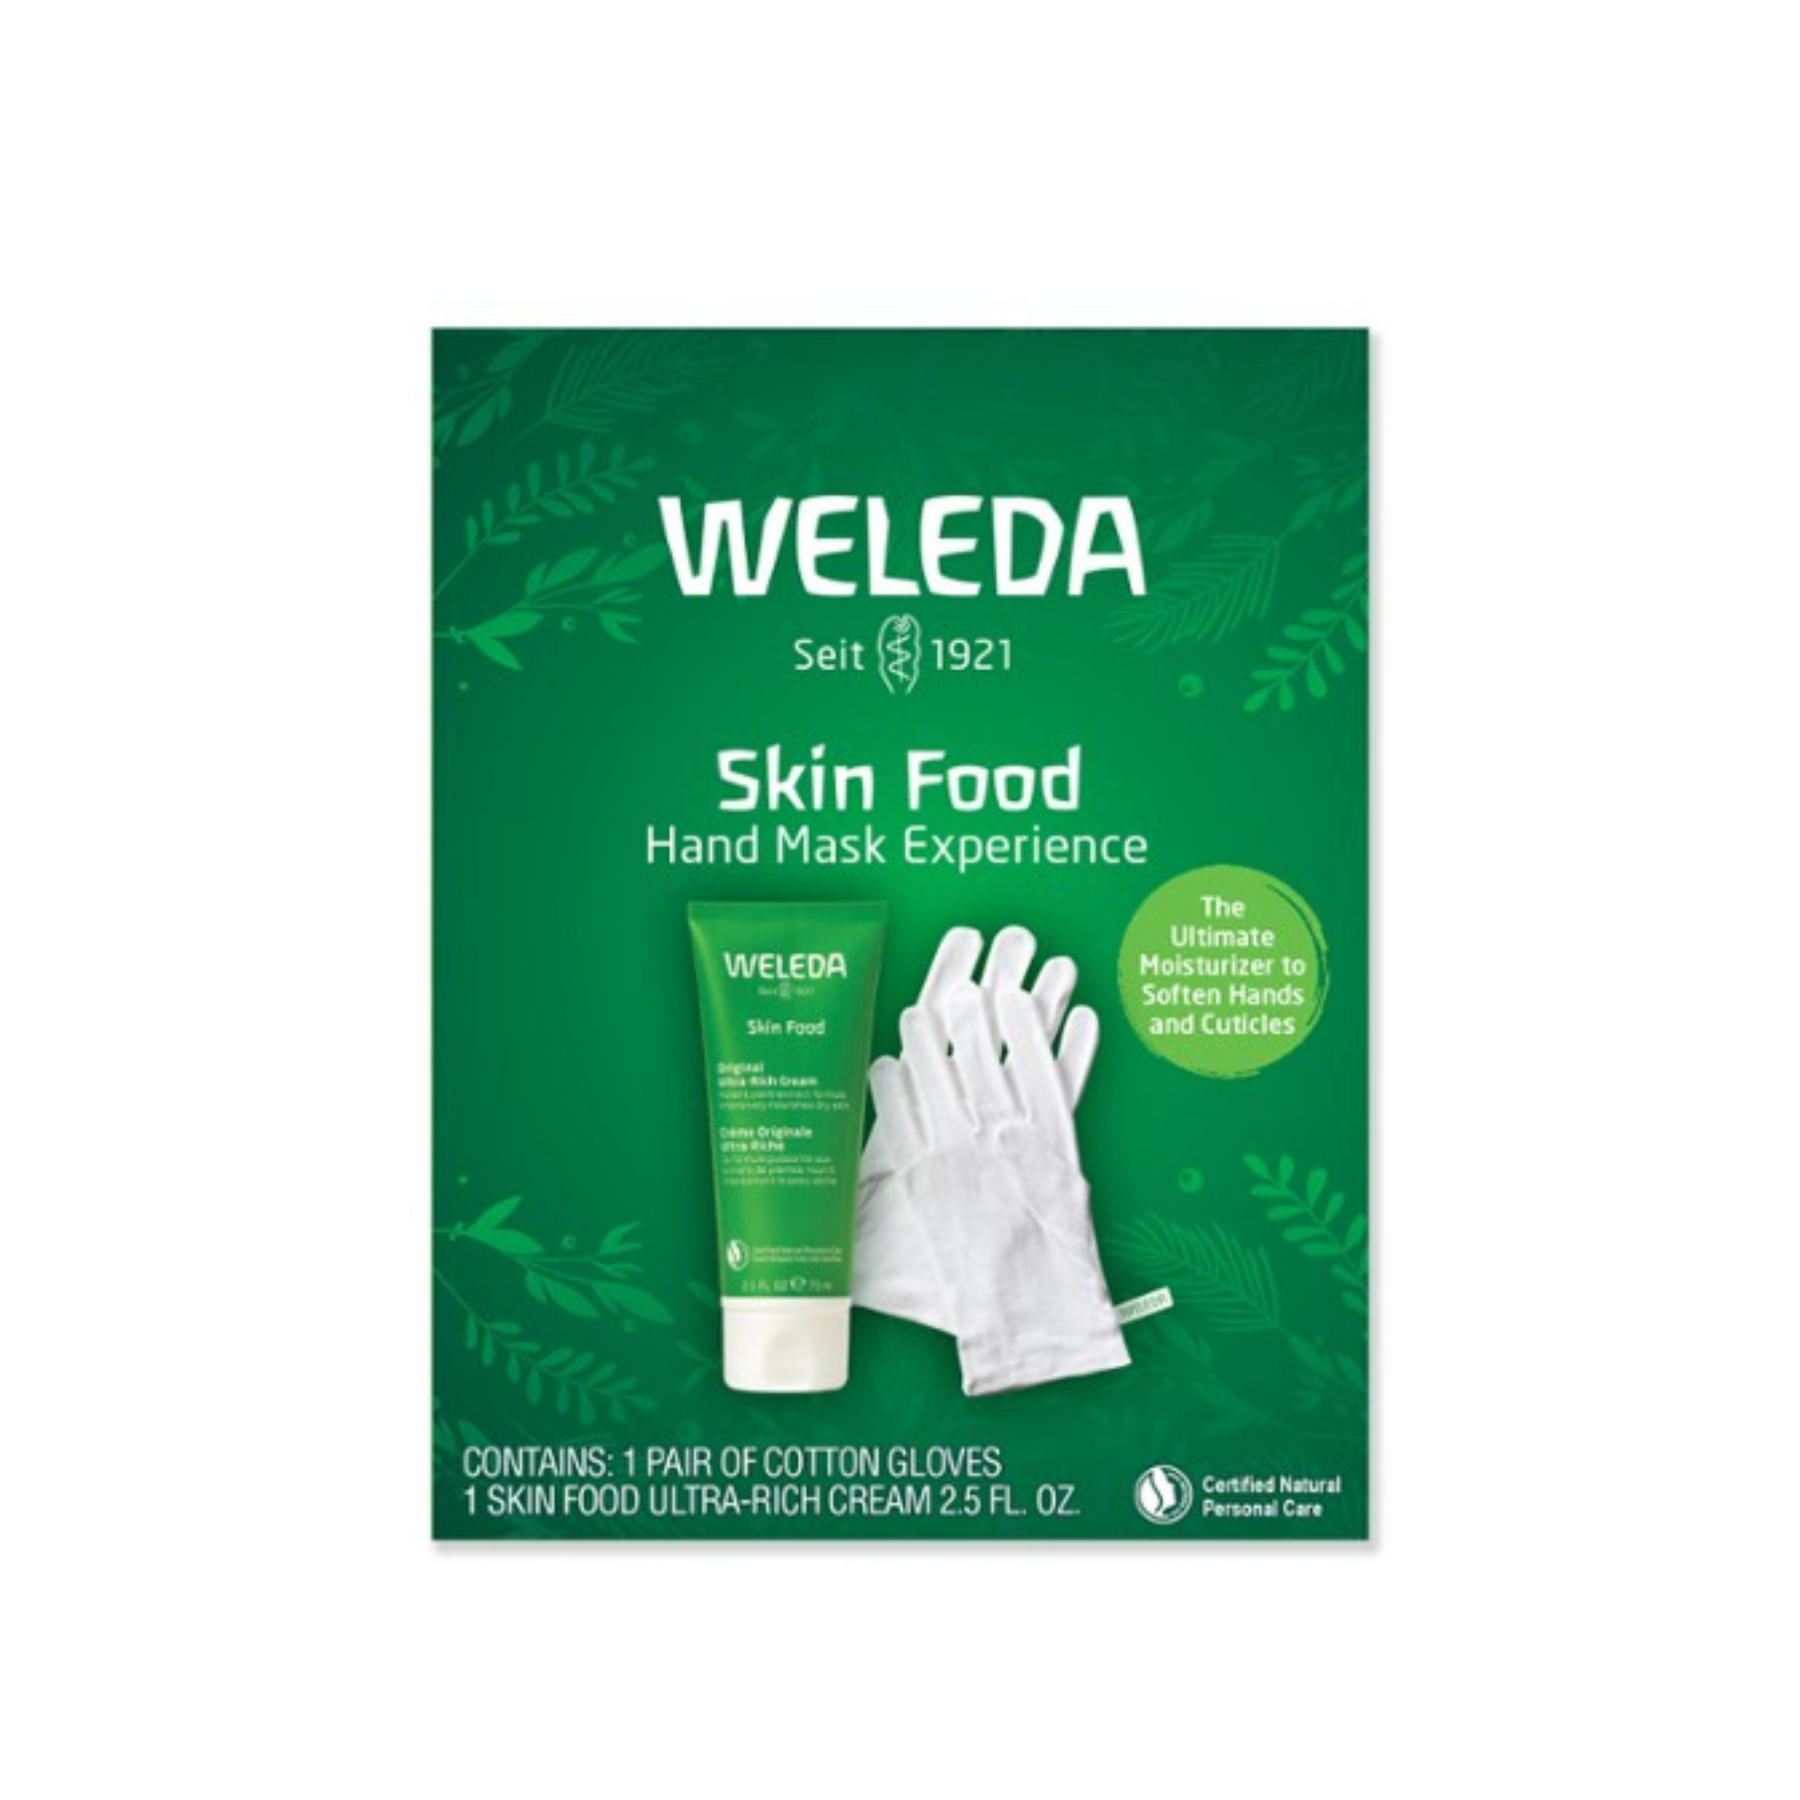 WELEDA Skin Food Hand Mask Experience Set